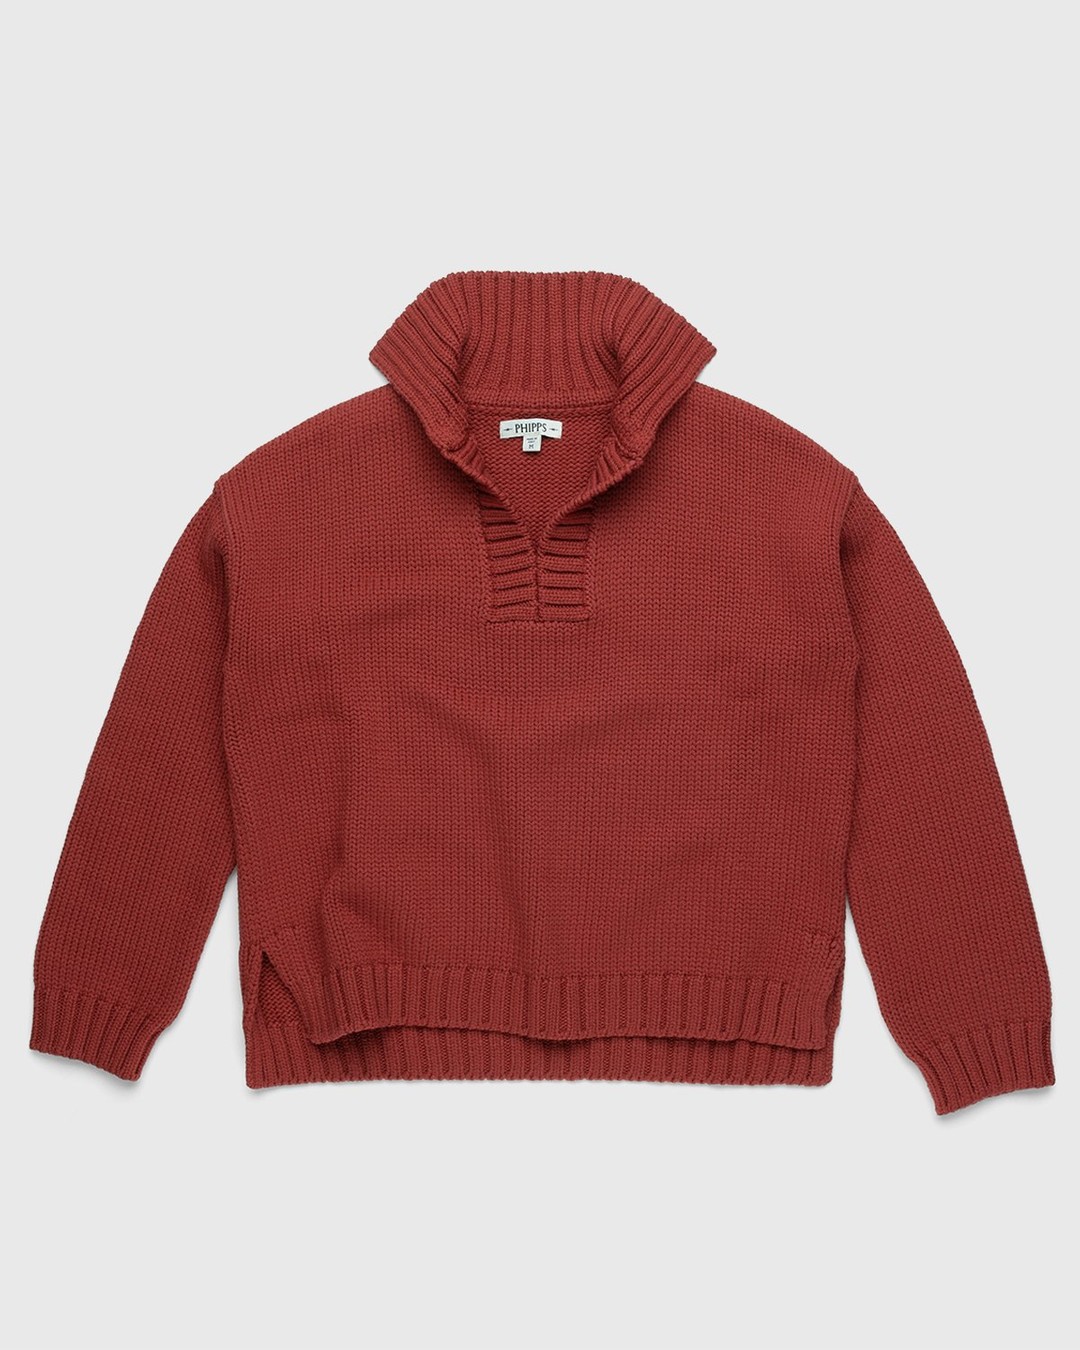 Phipps – Vareuse Sweater Rust - Shawlnecks - Red - Image 1